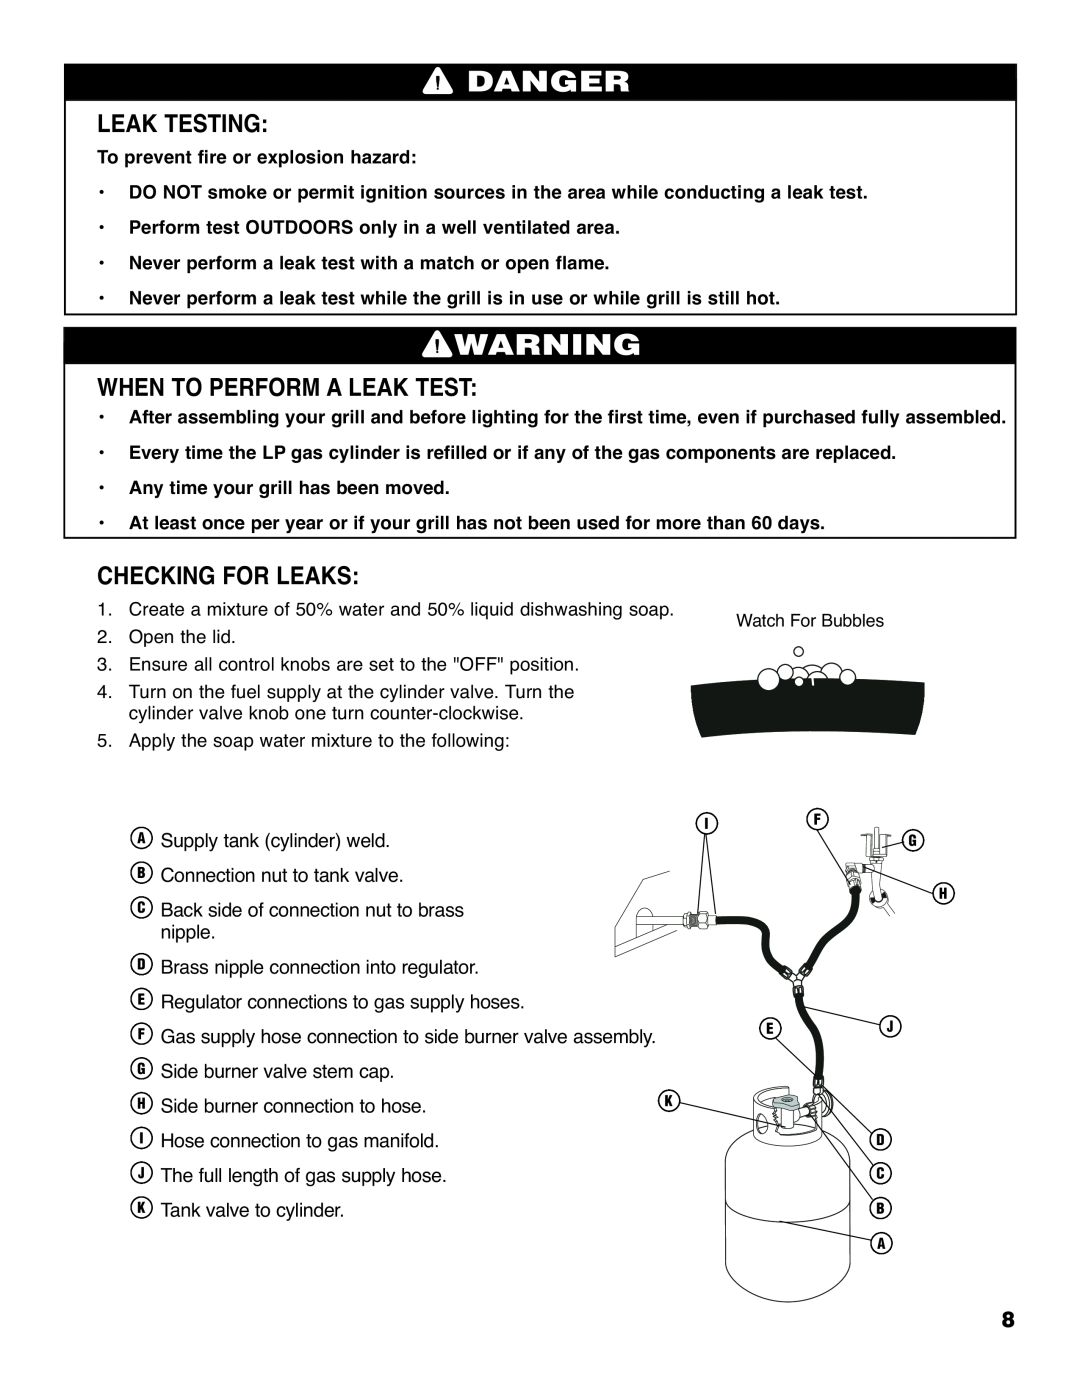 Brinkmann 4425 owner manual Leak Testing, When To Perform A Leak Test, Checking For Leaks, Danger 